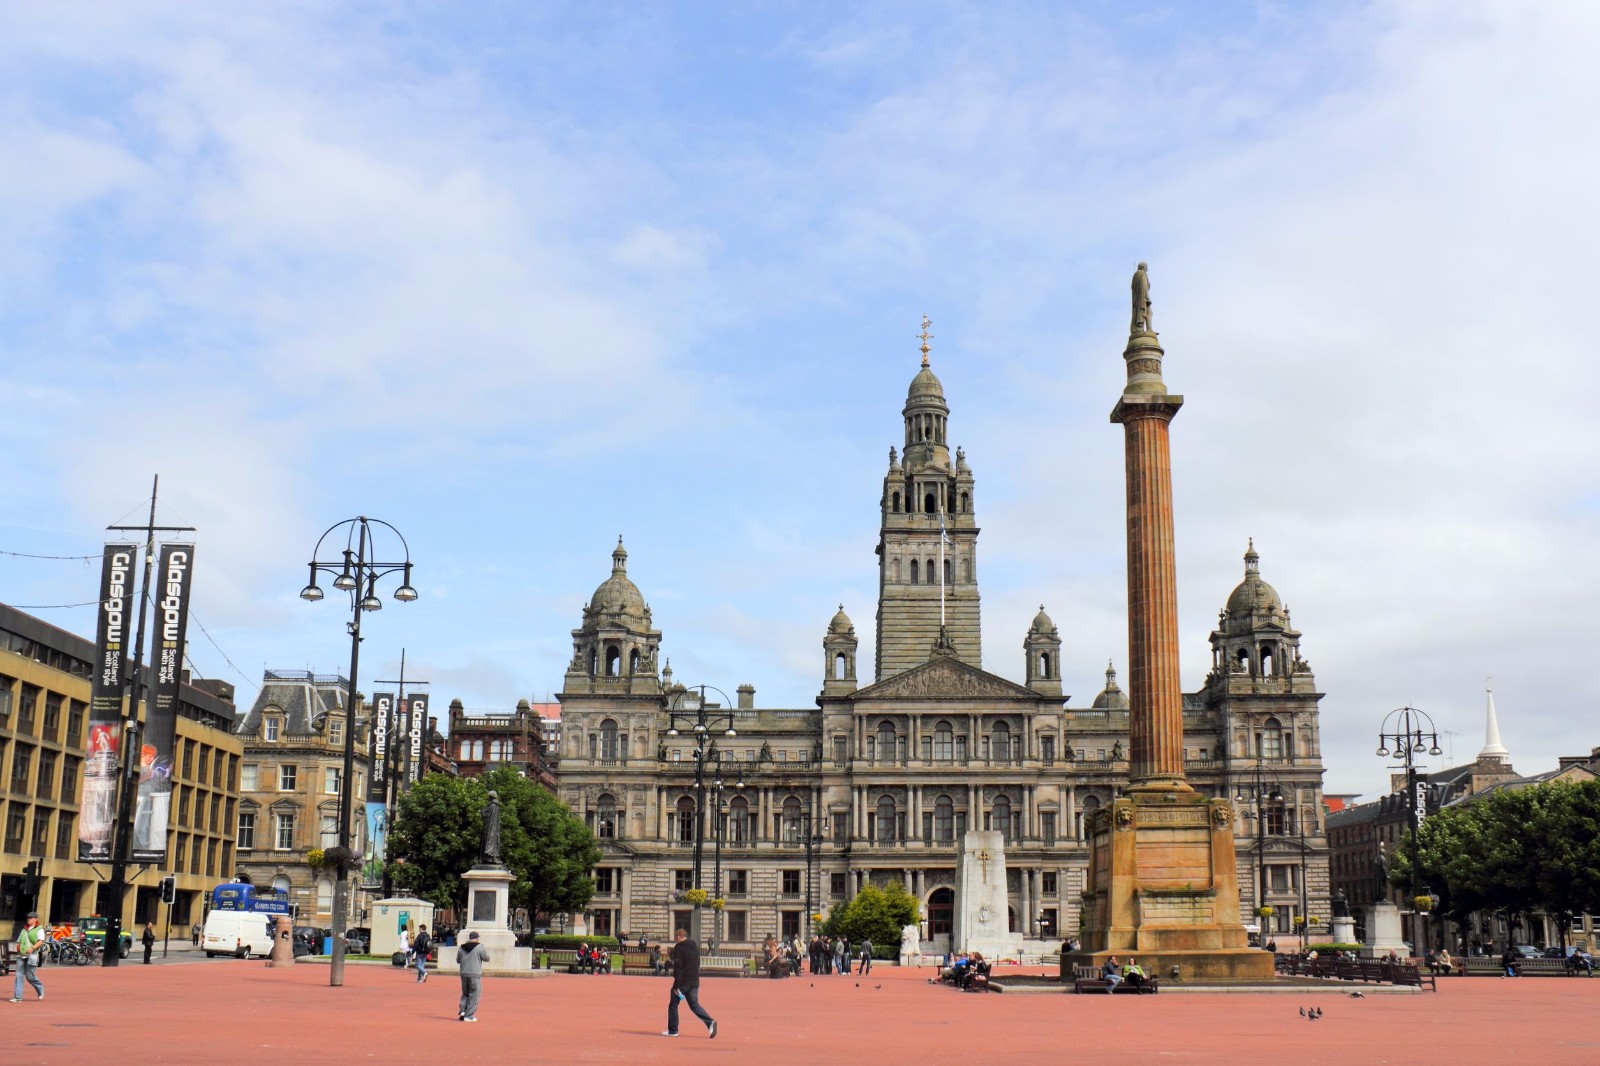 George-Square-in-Glasgow-Scotland.jpg